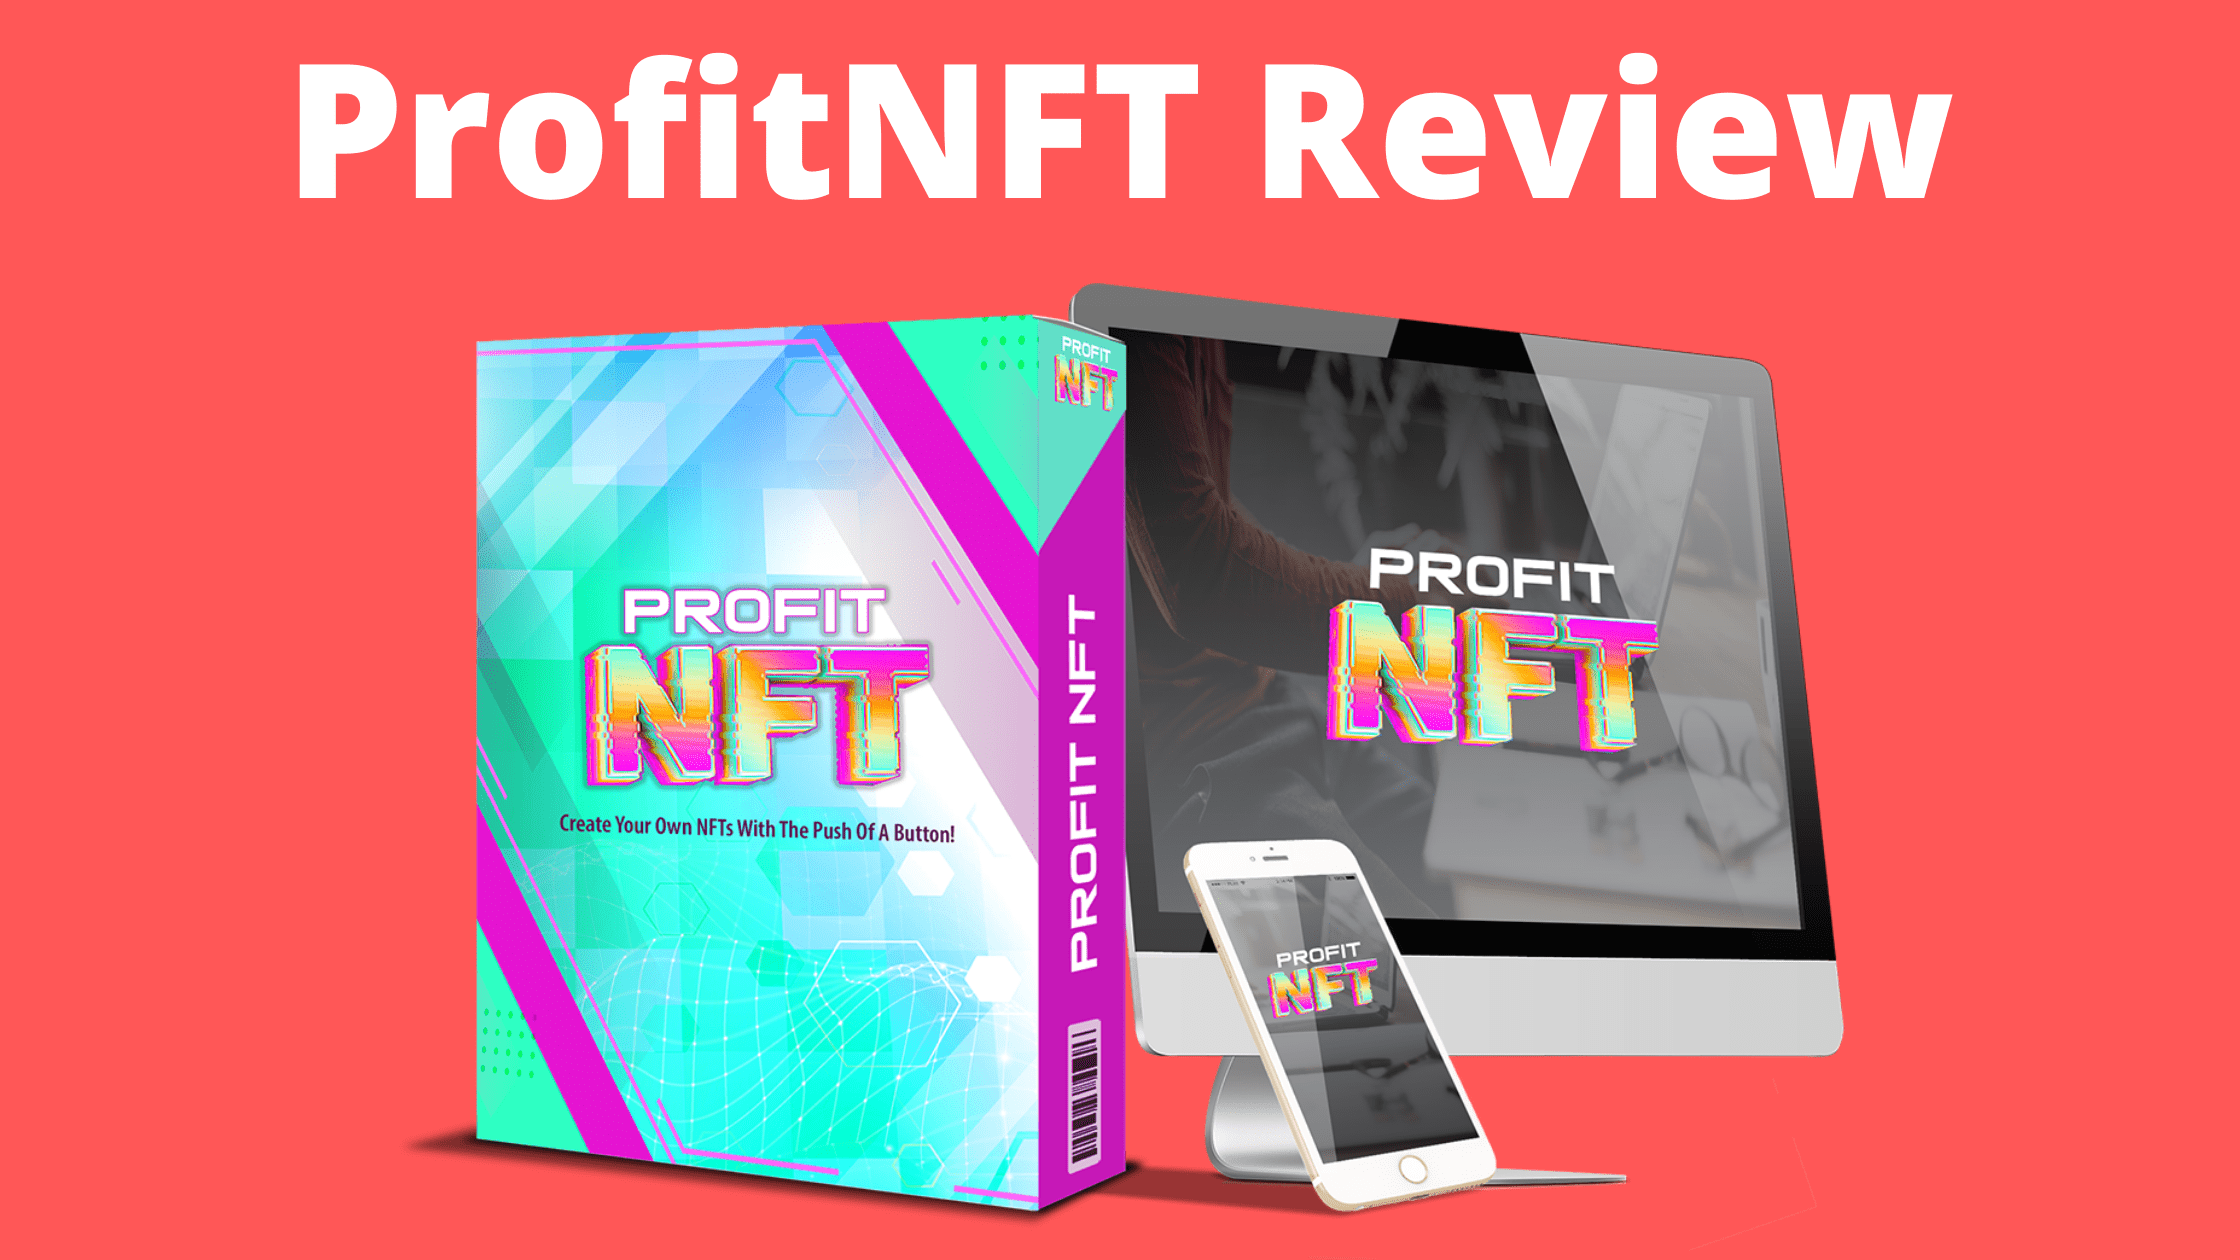 ProfitNFT Review